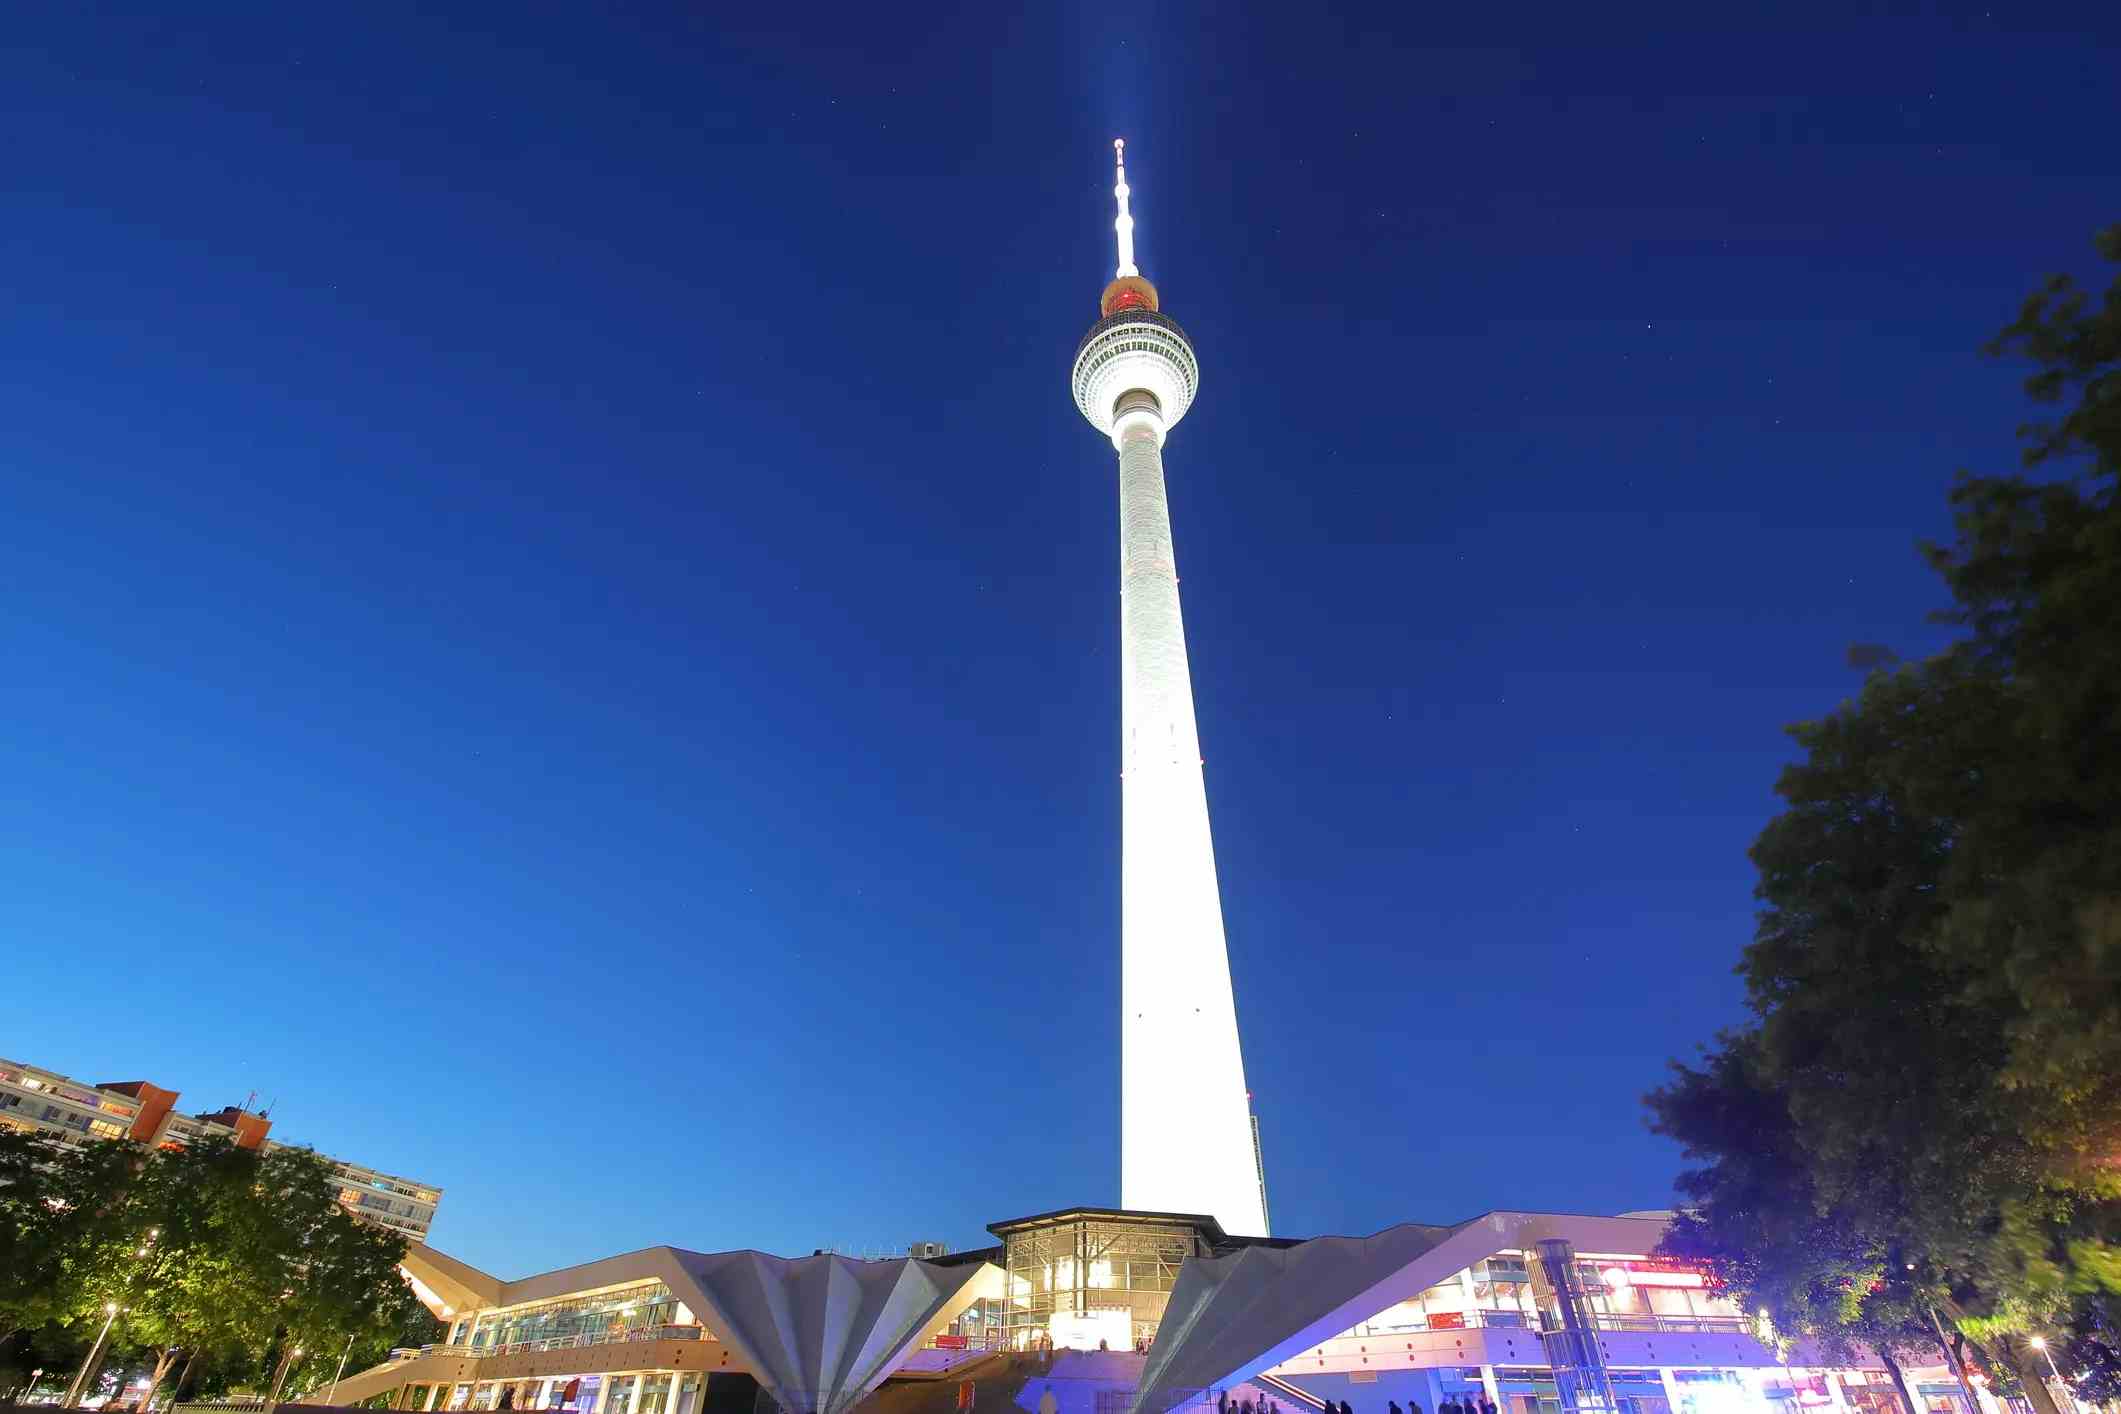 Berliner Fernsehturm image